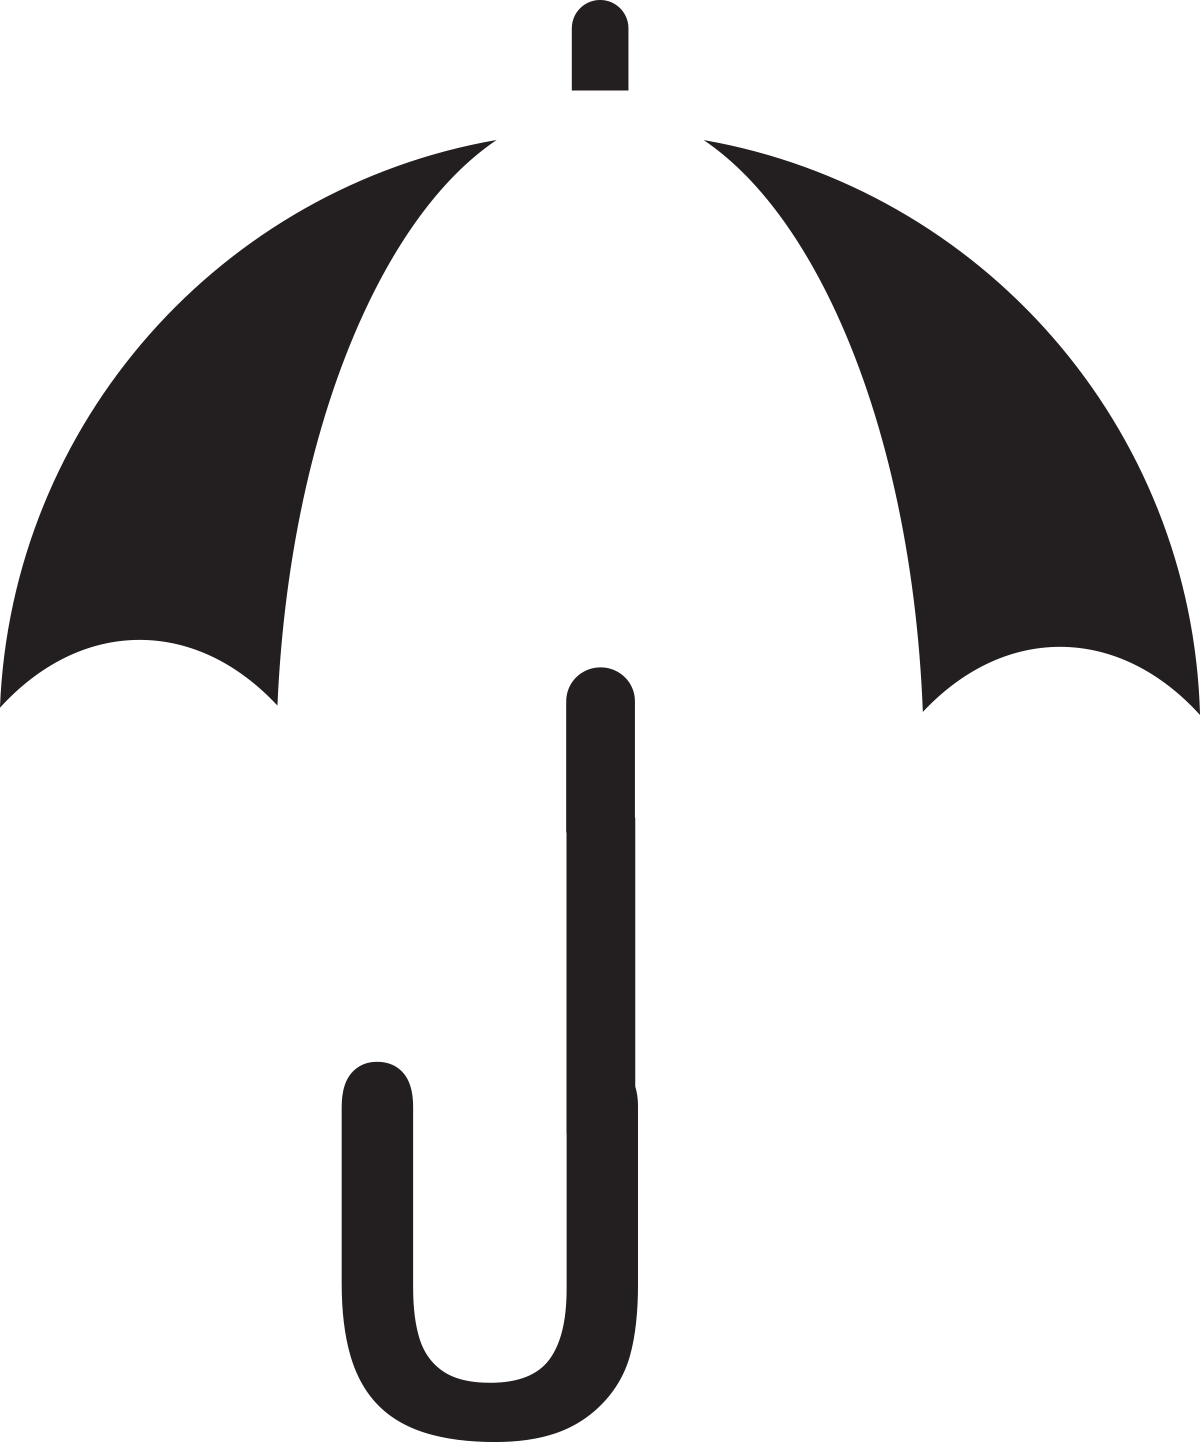 Black and white umbrella with U shaped handle